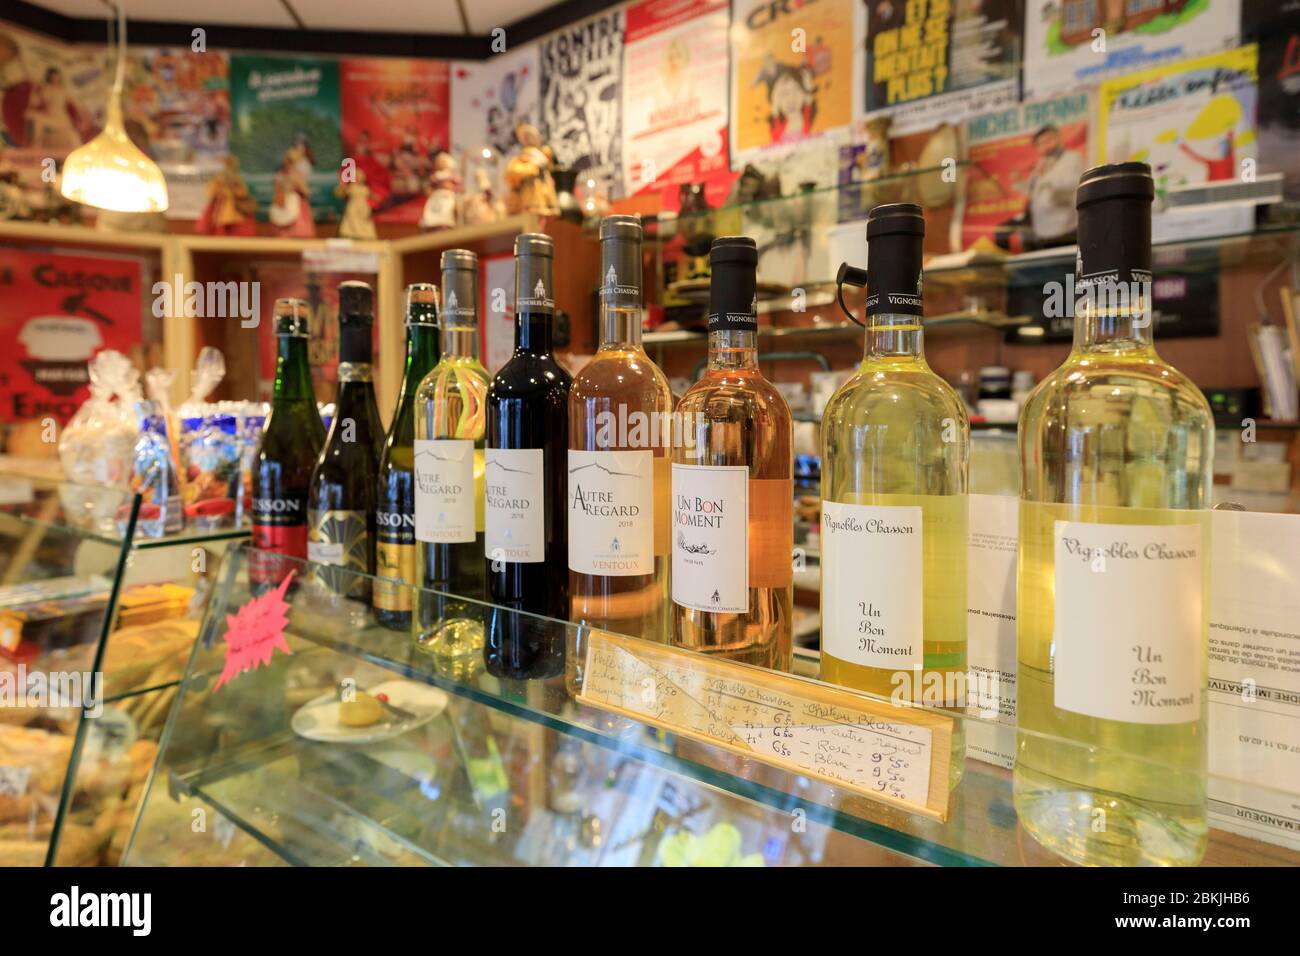 France, Vaucluse, Avignon, La Pause Gourmande bakery, bottles of wine Stock Photo